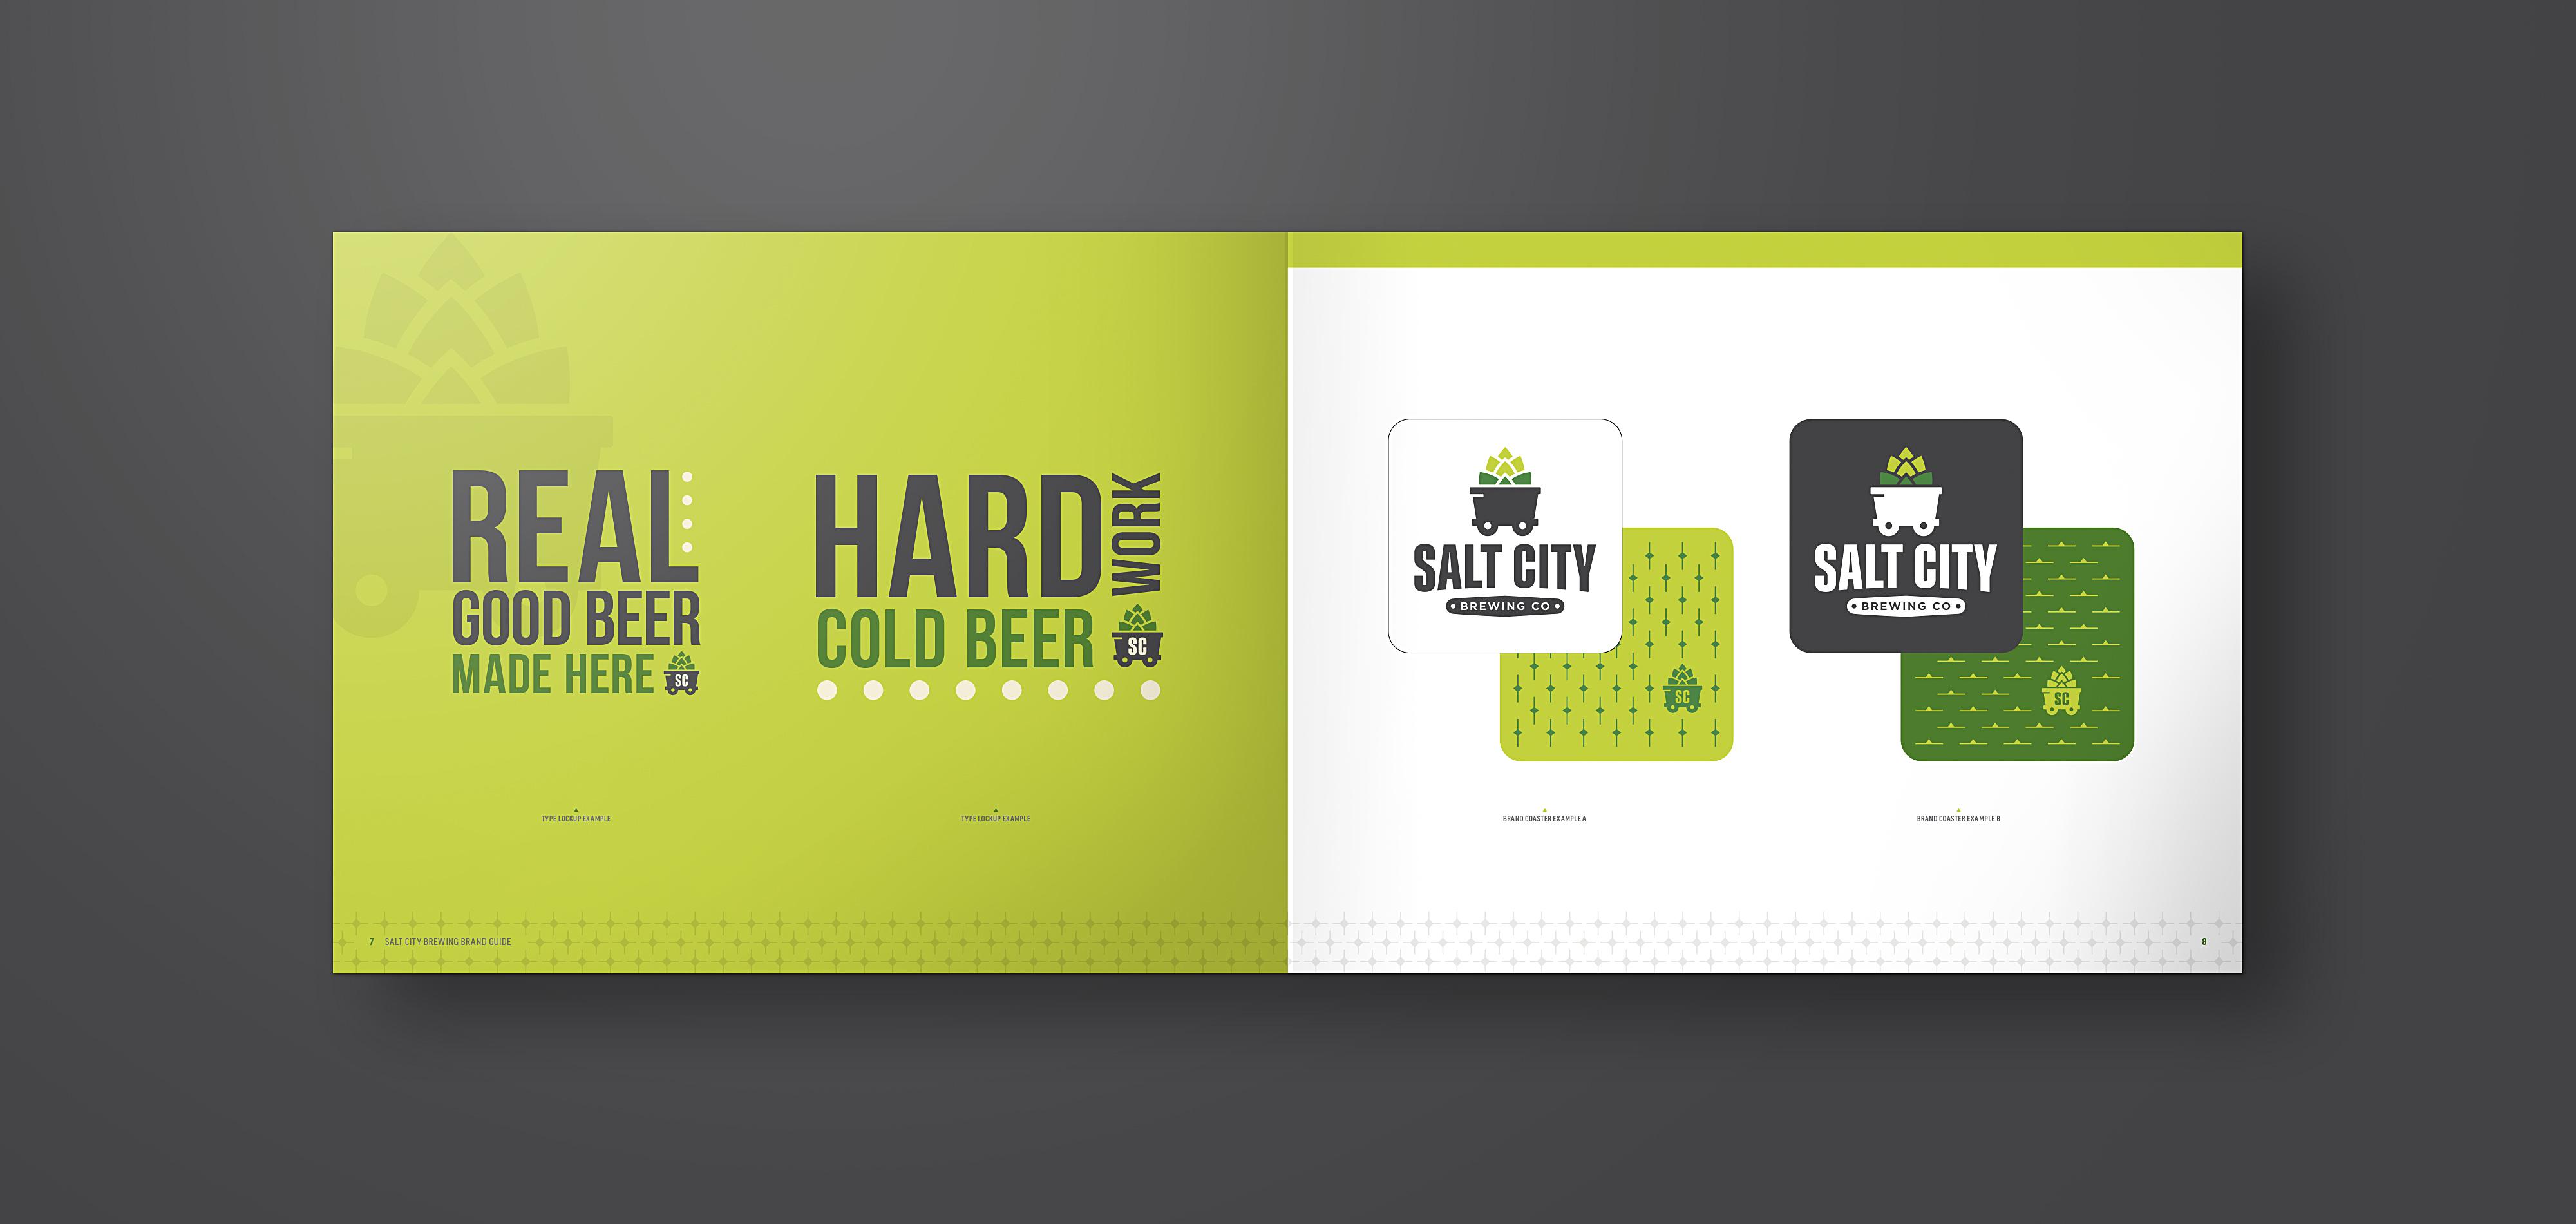 Salt City Brewing brand guide image